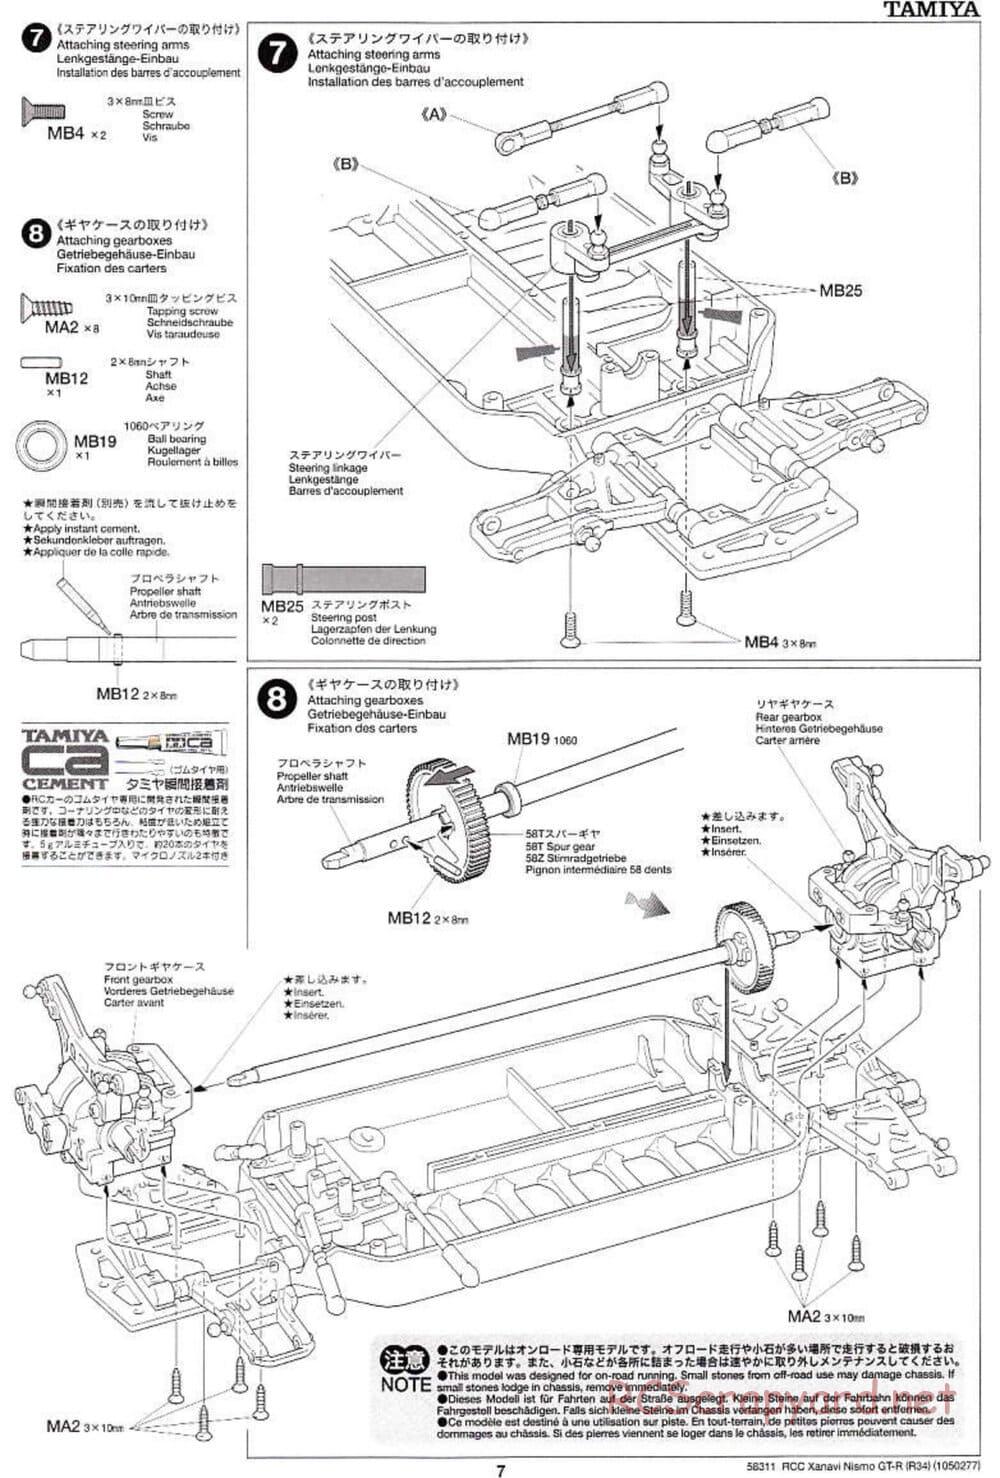 Tamiya - Xanavi Nismo GT-R (R34) - TB-02 Chassis - Manual - Page 7